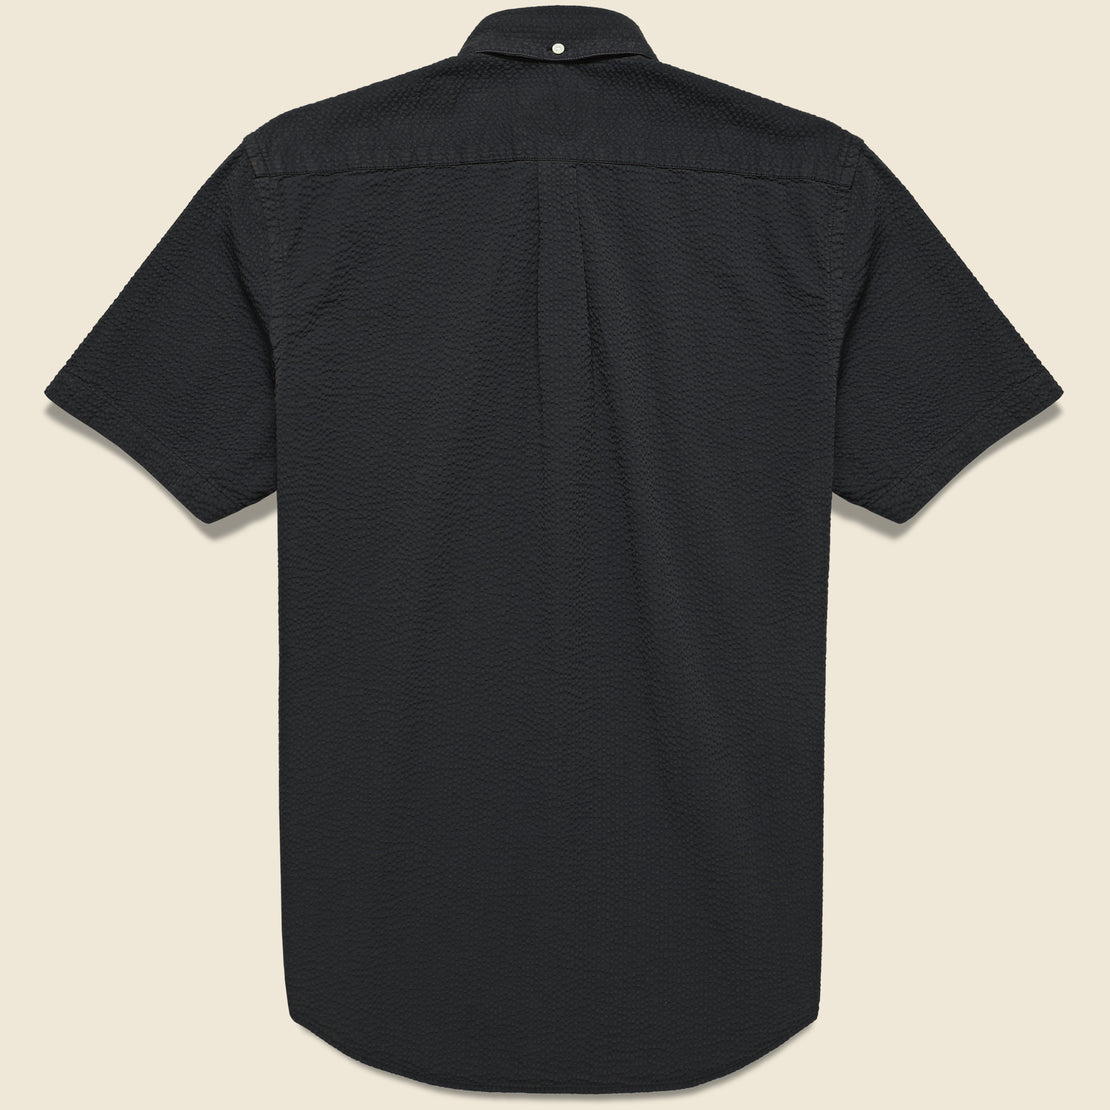 Atlantico Seersucker Shirt - Black